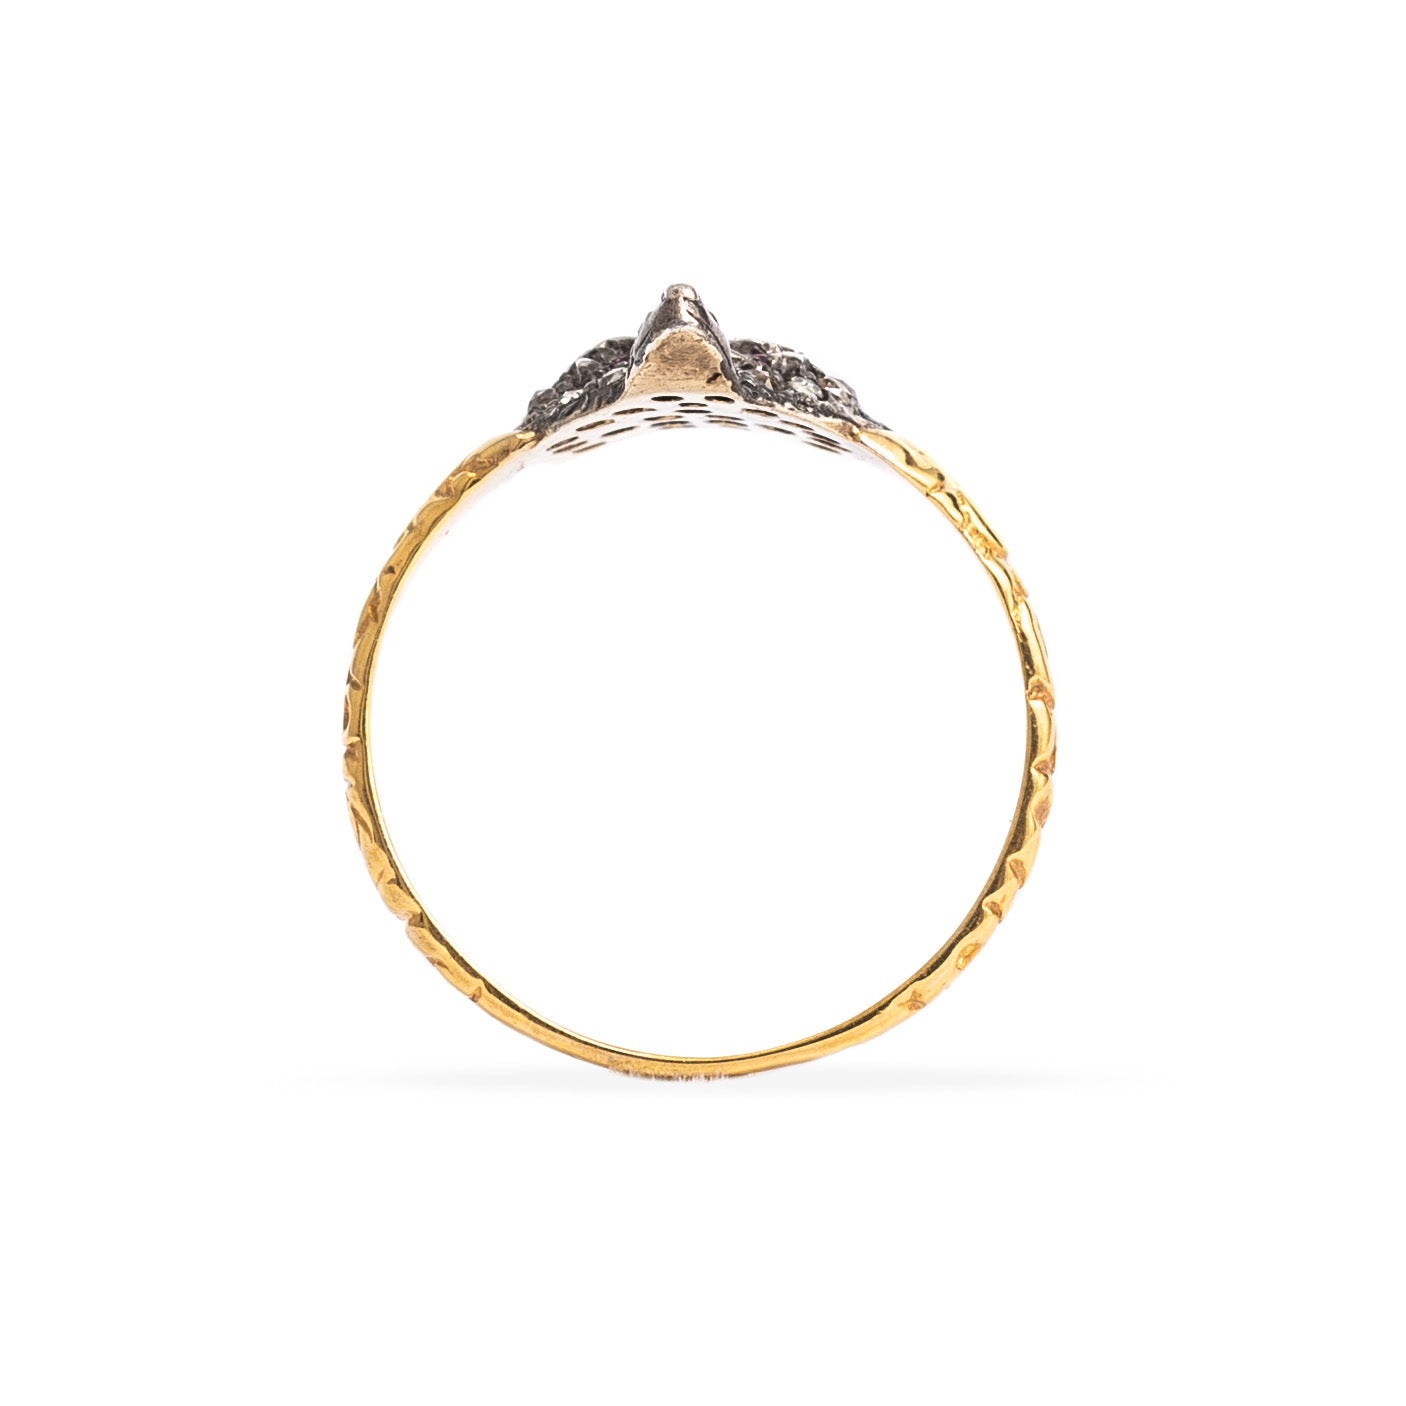 Edwardian Antique Gold, Diamond & Ruby Set Fox Head Ring - Size Q (Code A259)